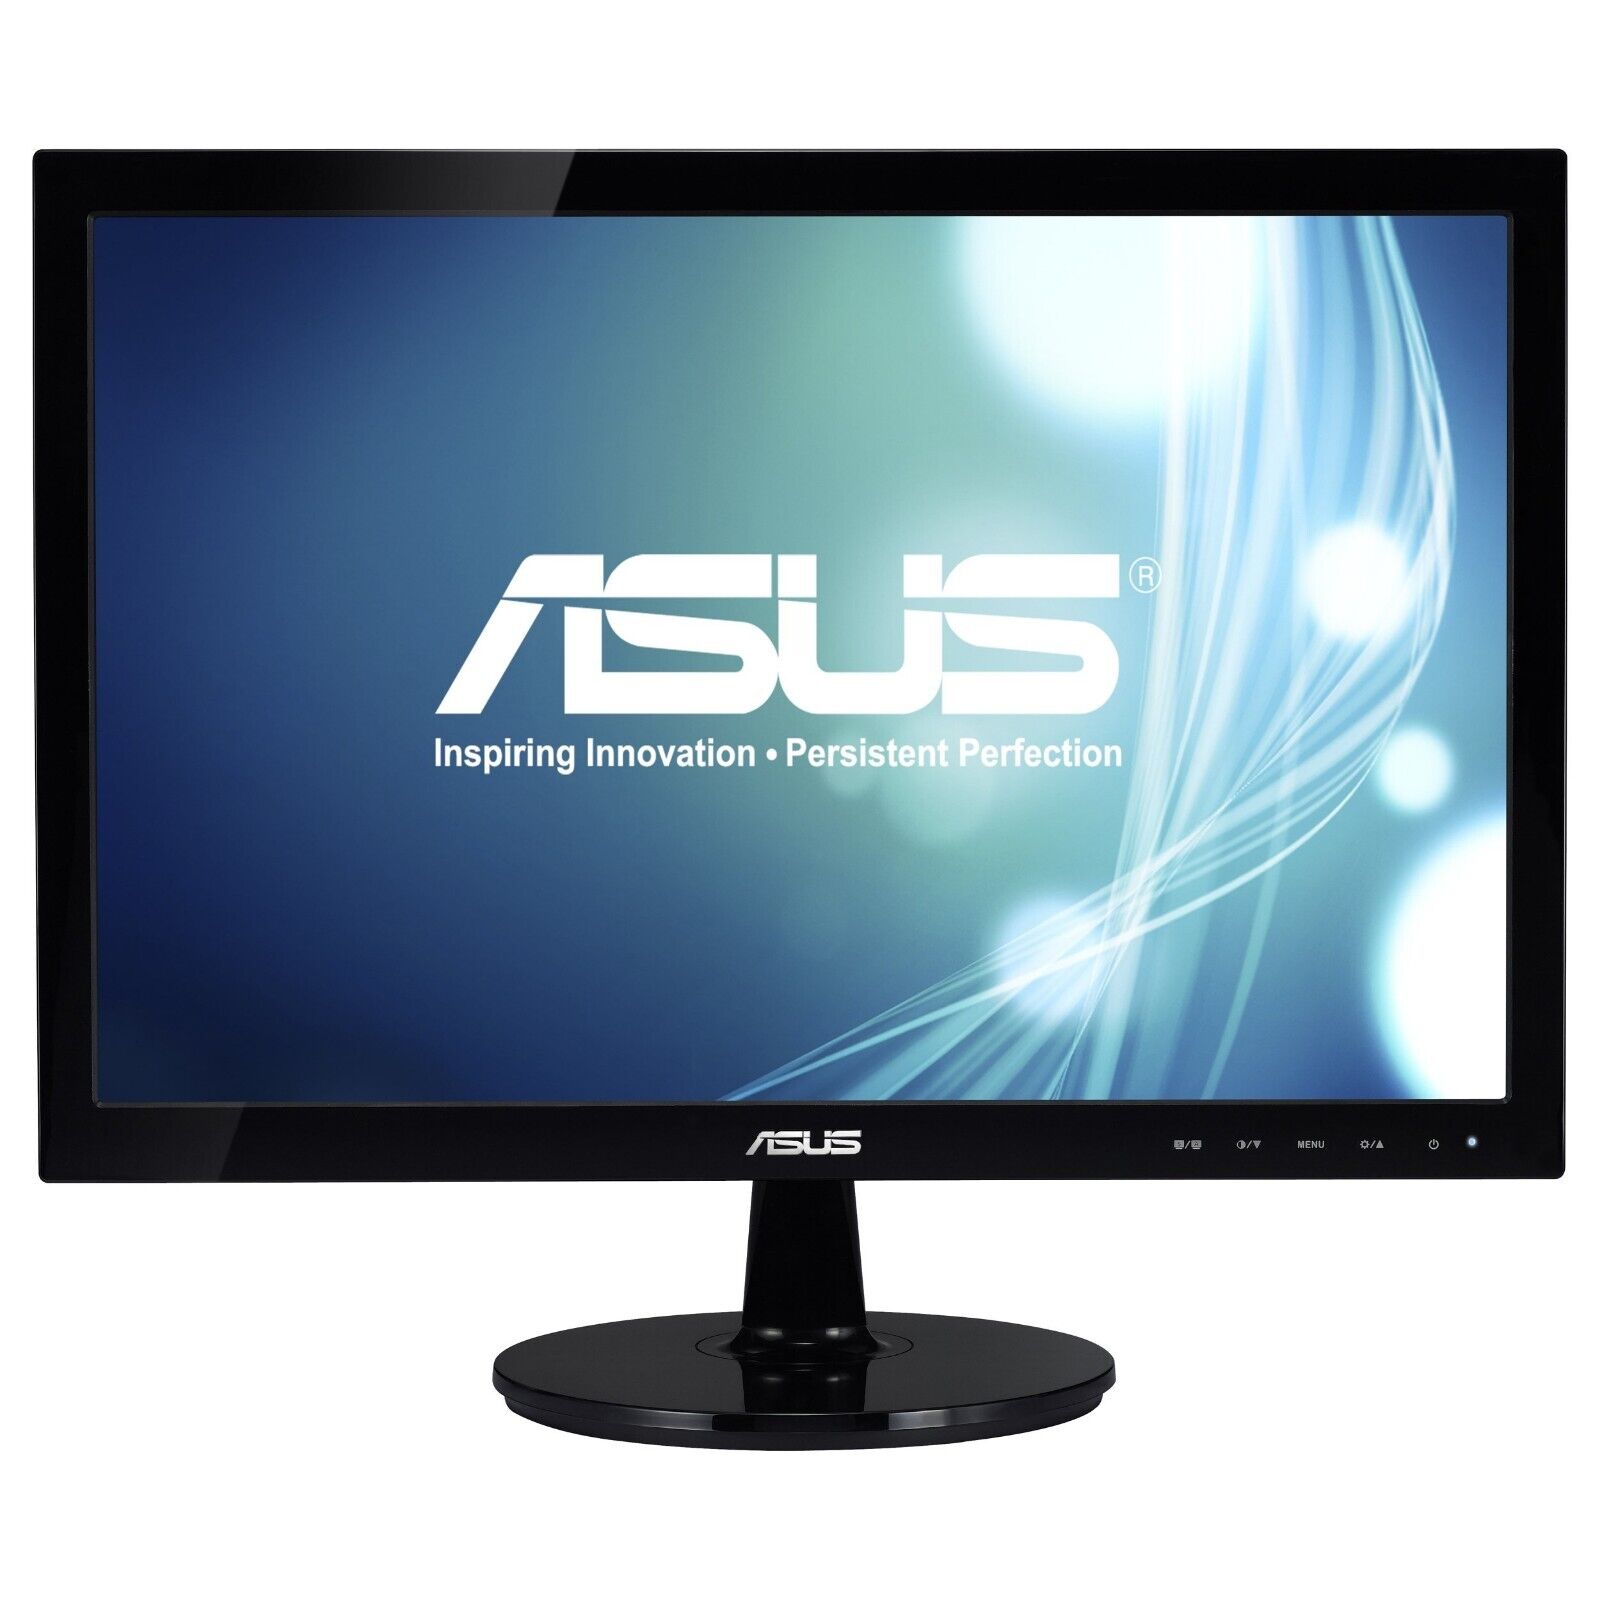 ASUS VS197D LCD Monitor